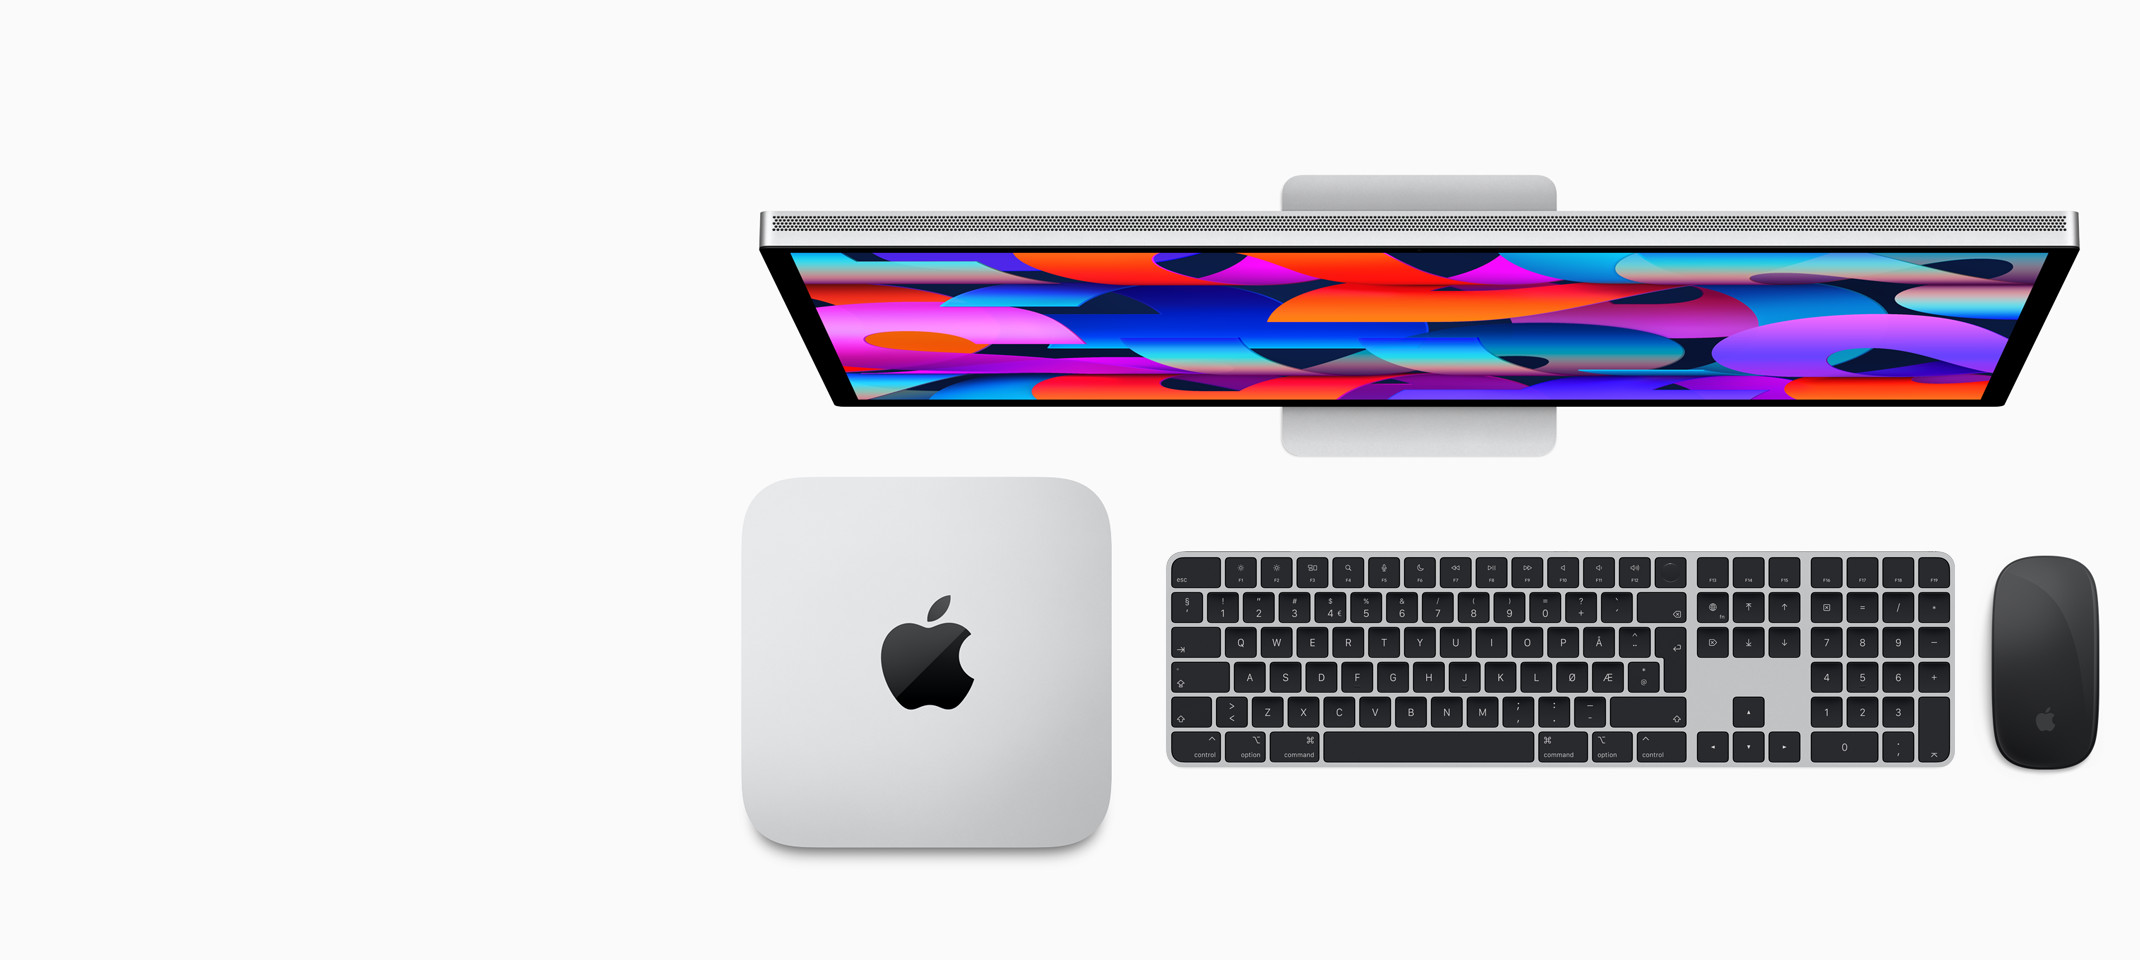 Studio Display, Mac Studio, Magic Keyboard med Touch ID og talltastatur, og Magic Mouse 